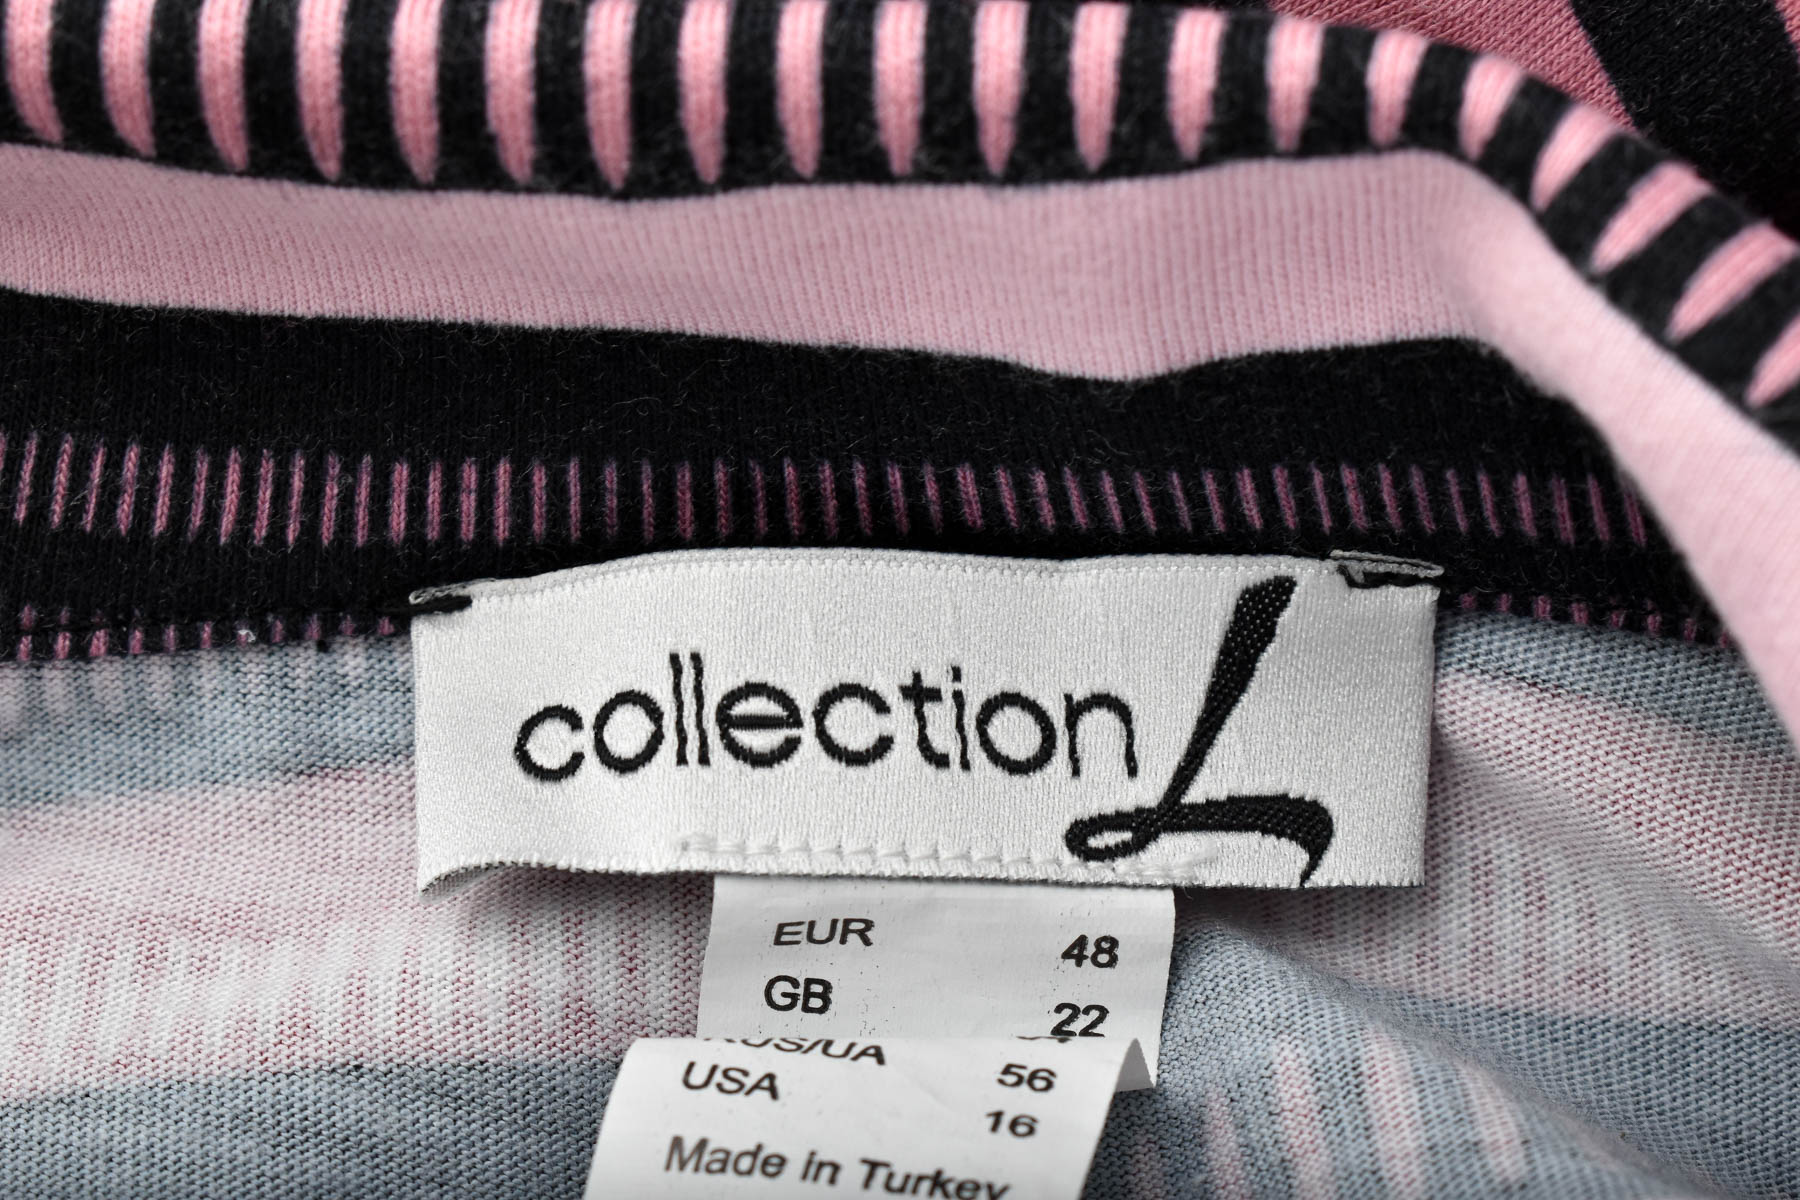 Women's blouse - Collection L - 2